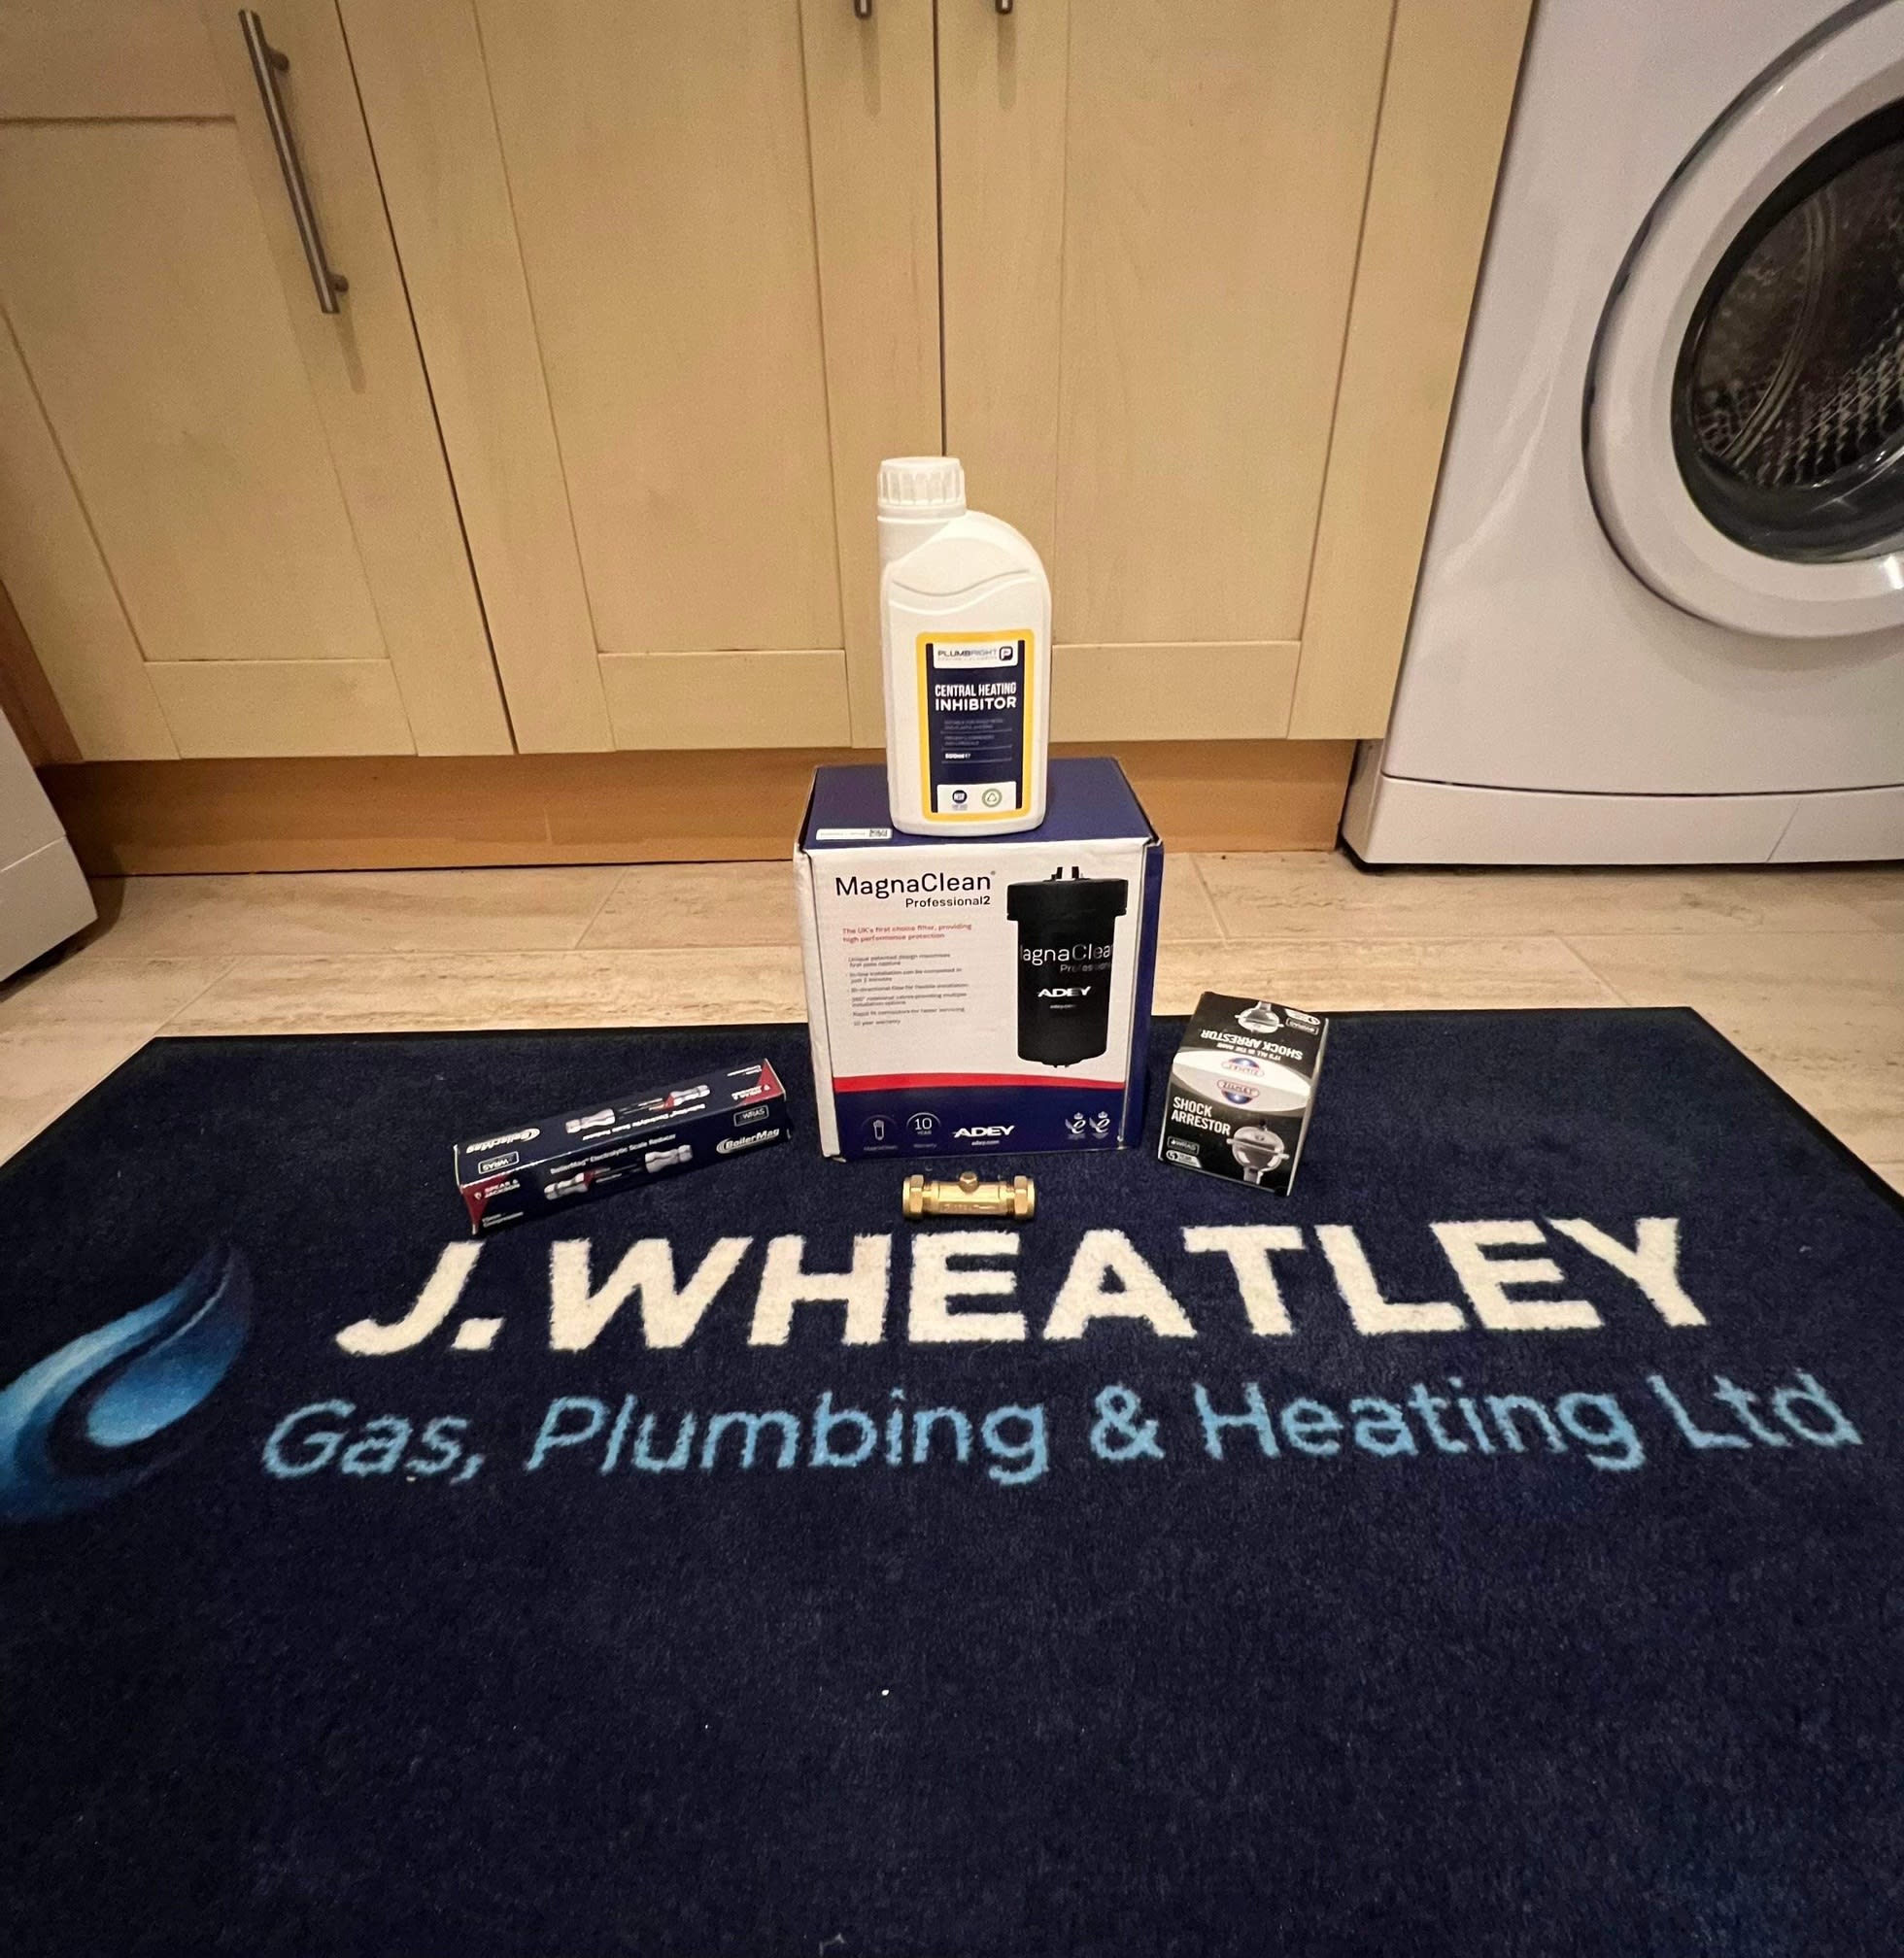 John Wheatley Gas Plumbing & Heating Ltd Filey 01723 892057